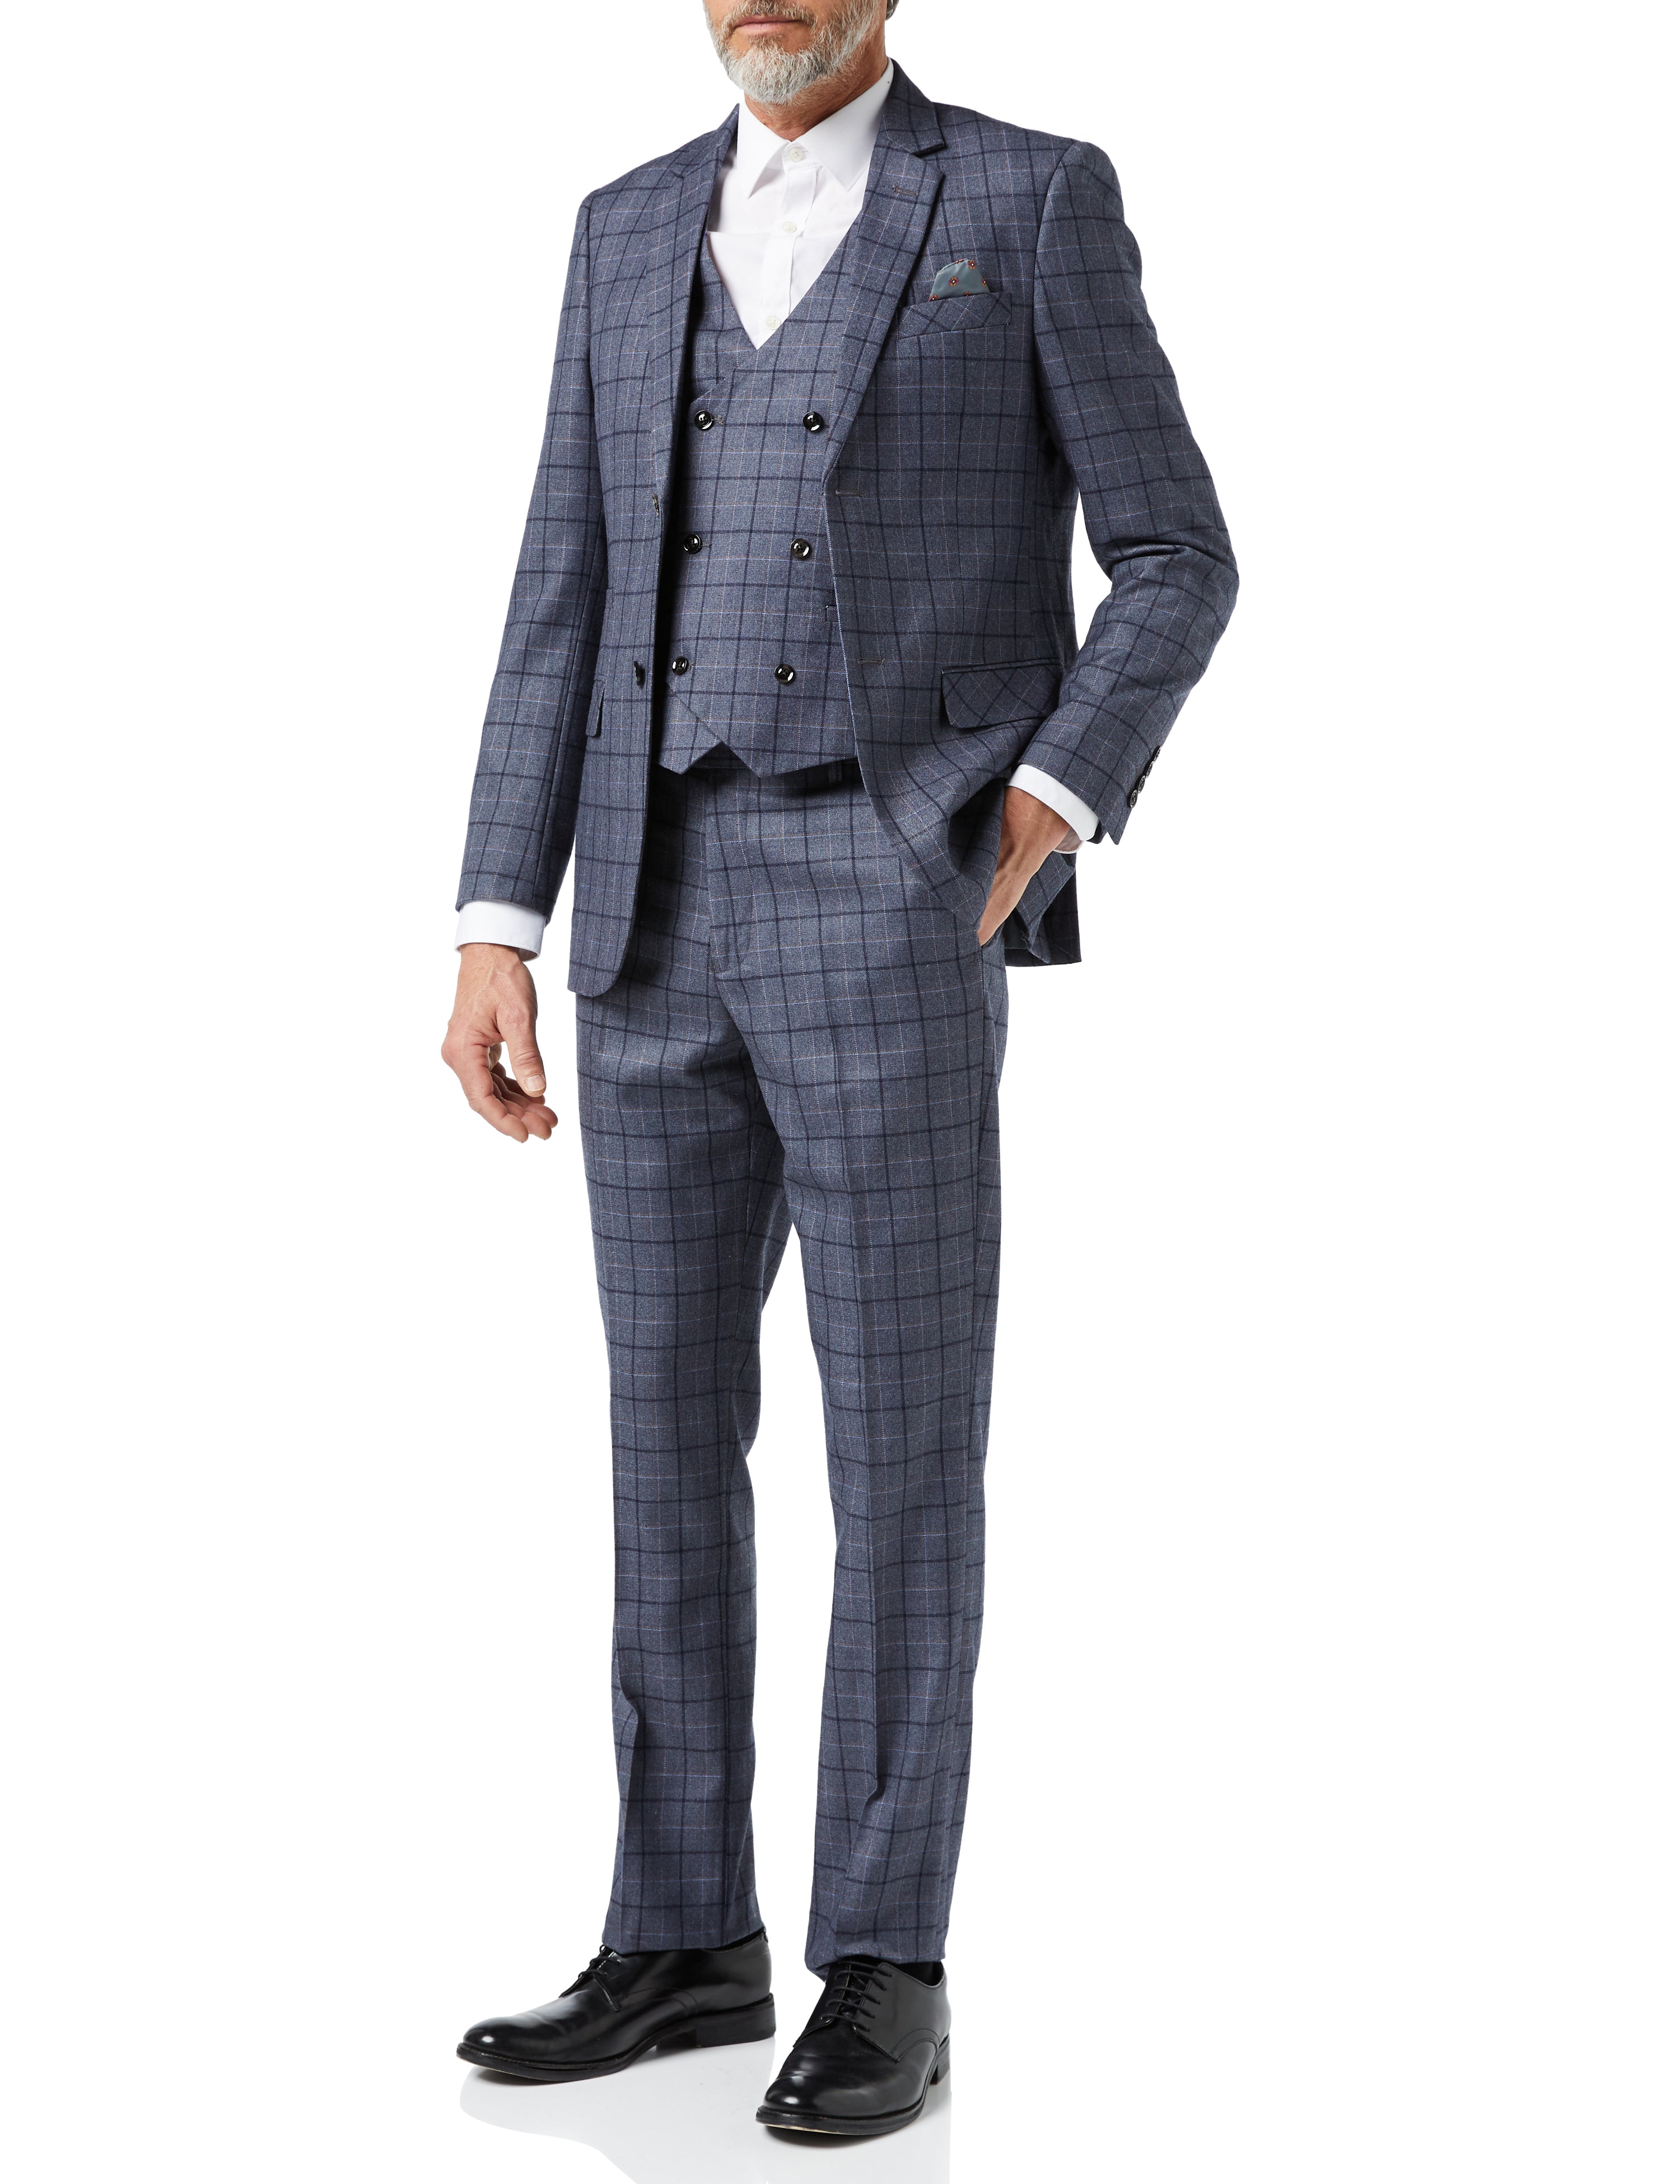 Mens 3 Piece Grey Check Suit Retro Vintage Smart Tailored Fit Classic Formal